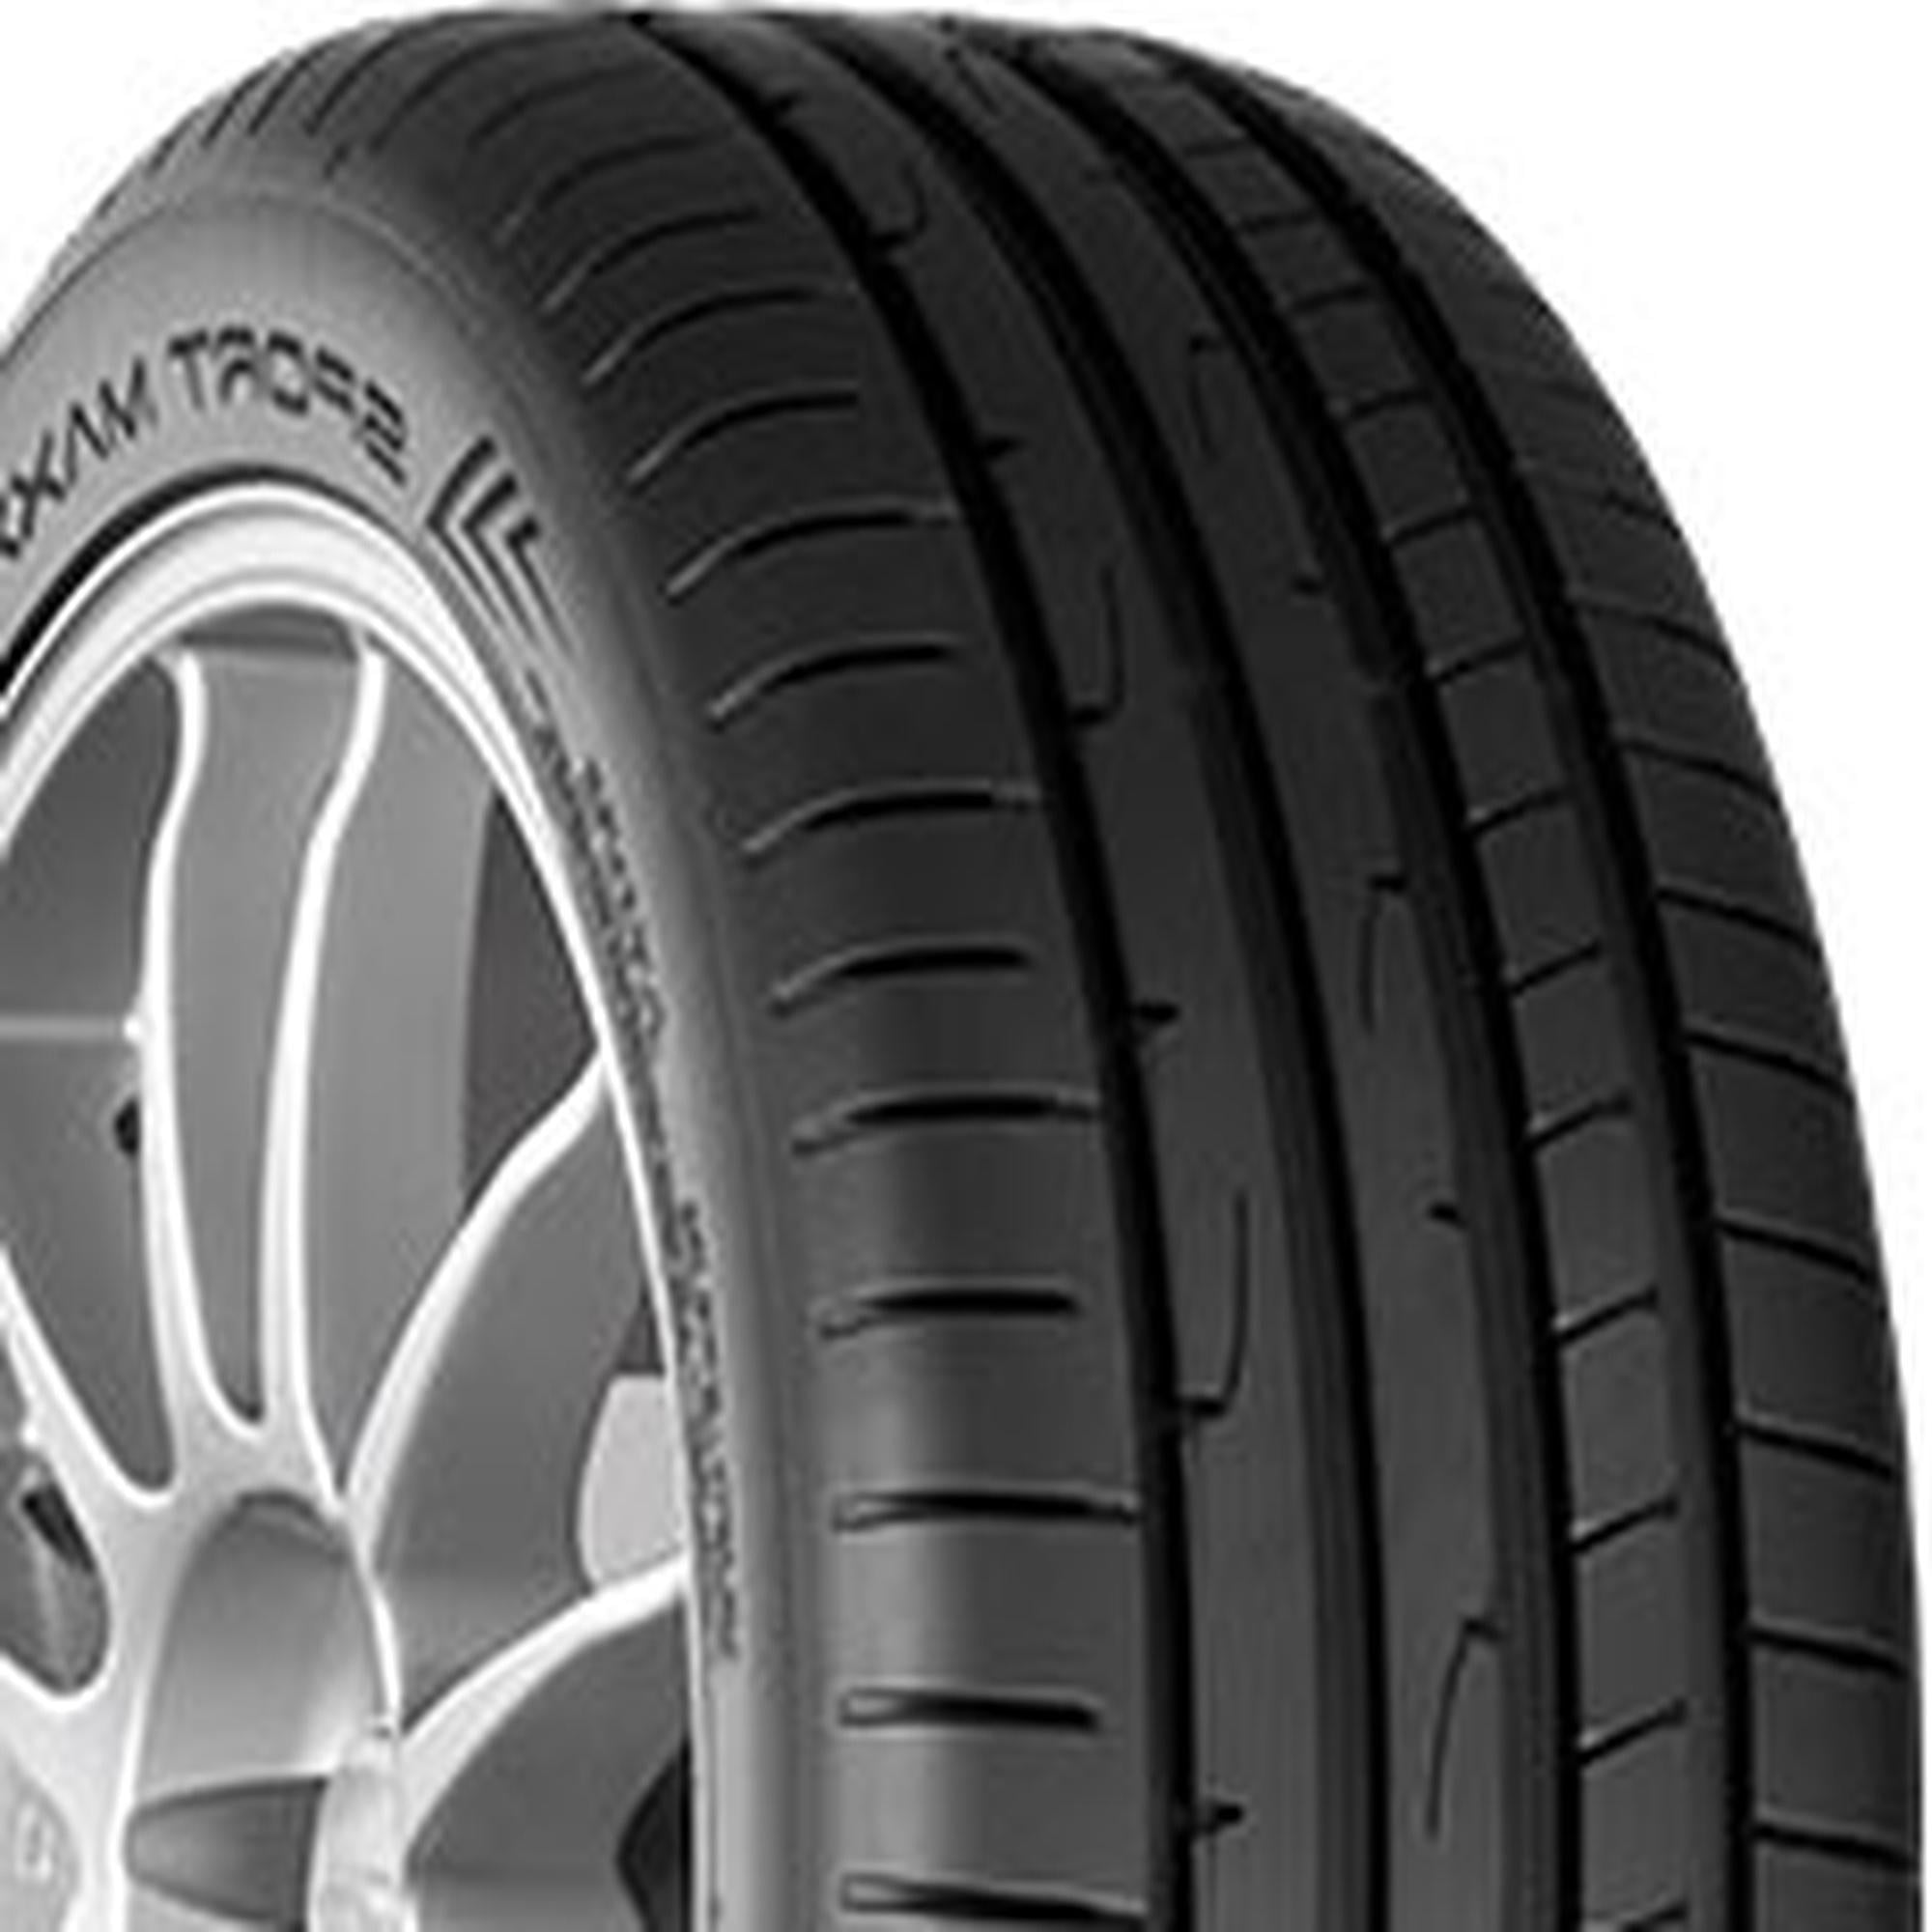 Dunlop Sport Maxx Rt2 255/35ZR18 328i 2016-19 Fits: ATS 2011 Cadillac V 94Y Tire Base, BMW Performance